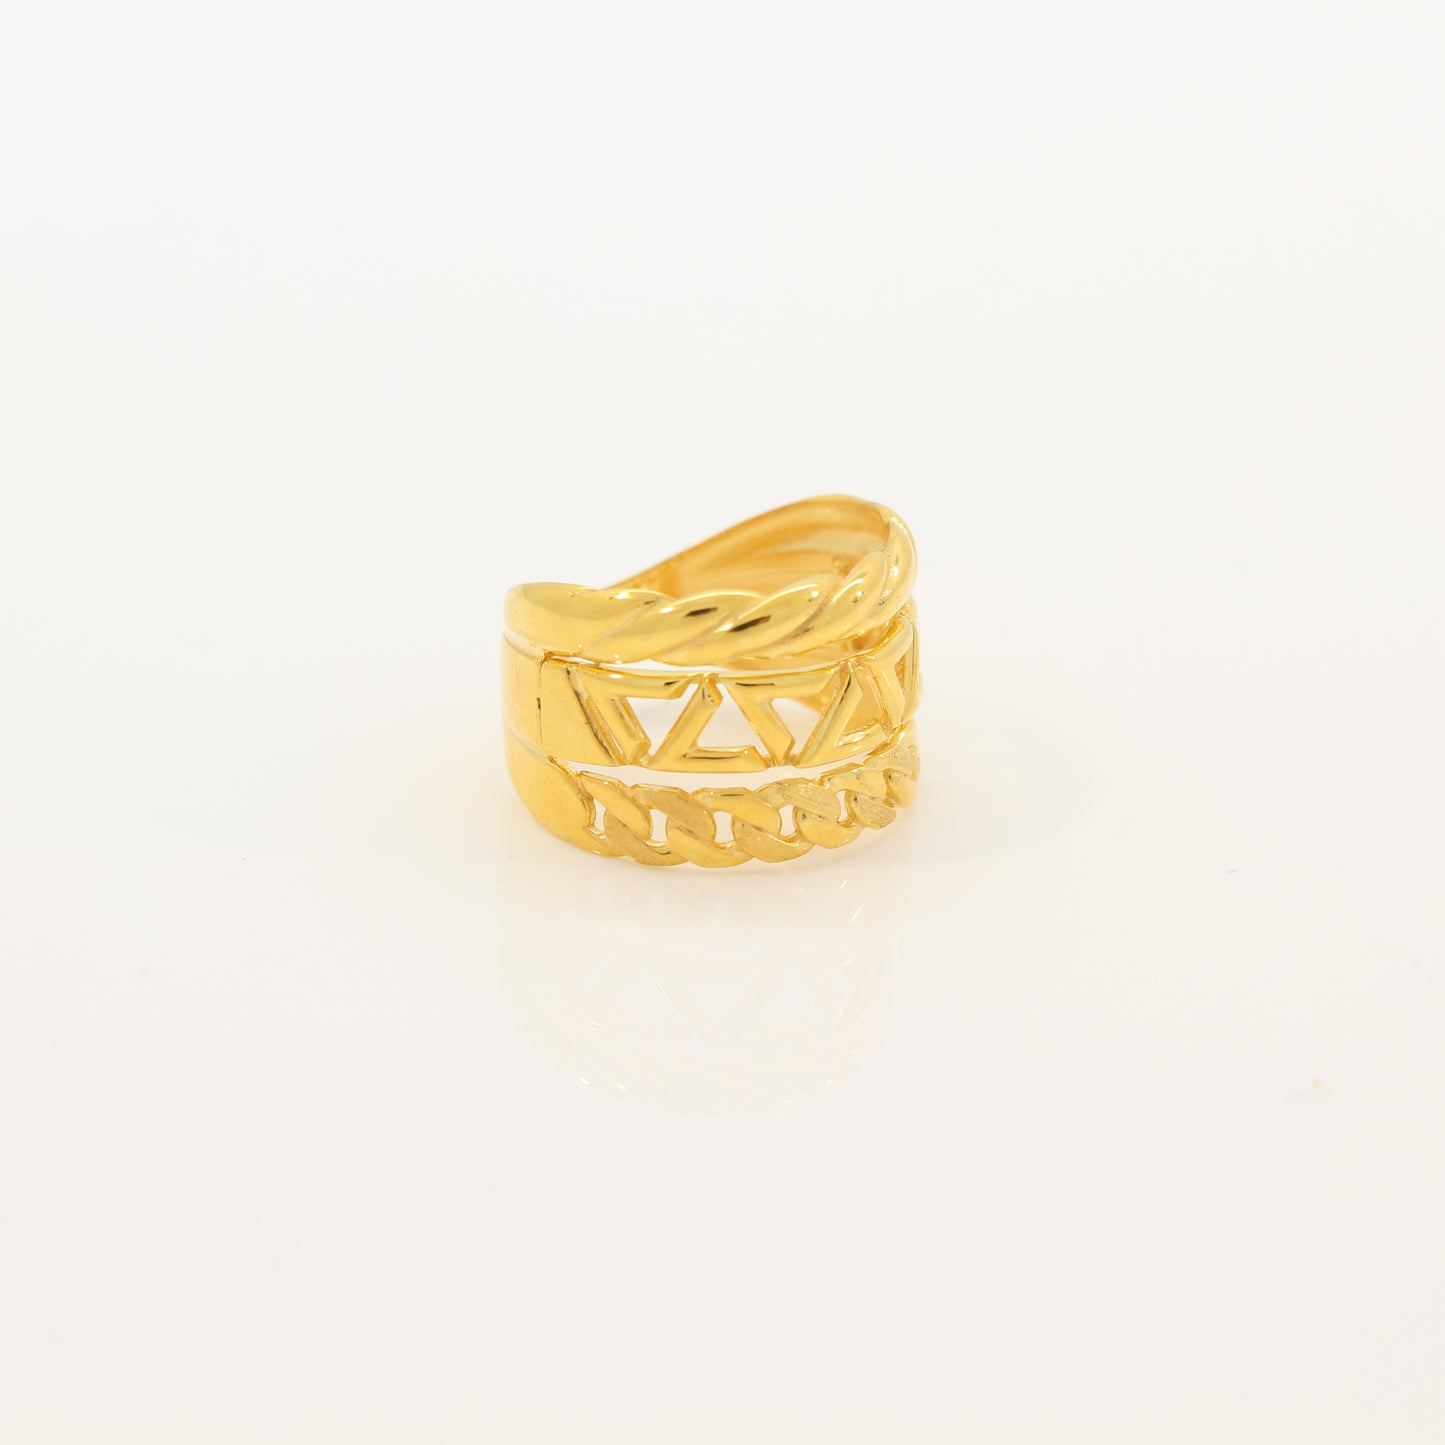 21K Gold Ring (size 6.5/8.5)